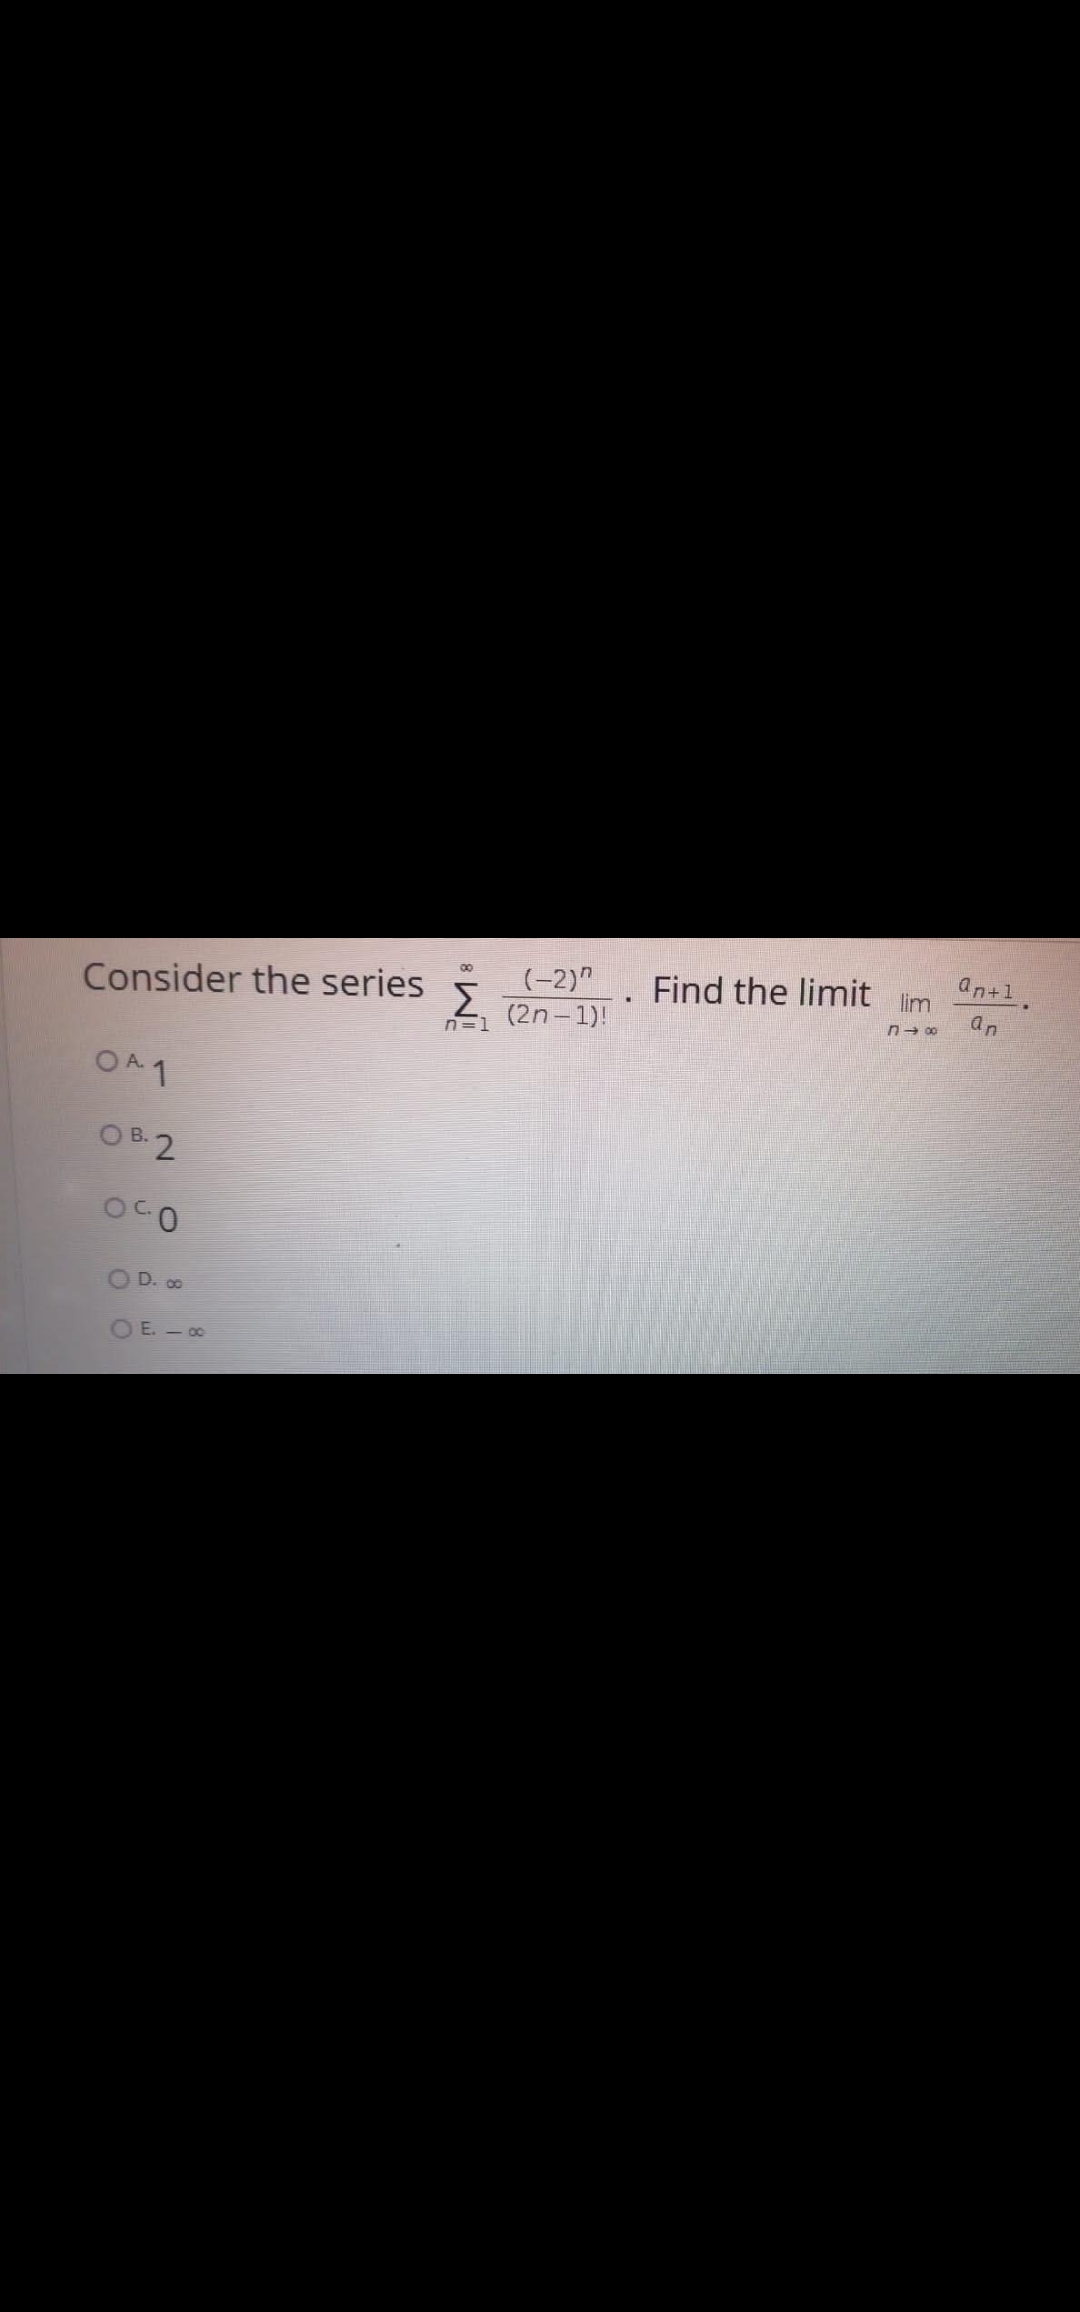 an+1
(-2)"
Σ
Find the limit lim
an
00
Consider the series
(2n - 1)!
n=1
OA 1
O B. 2
D. 00
OE.- 00
